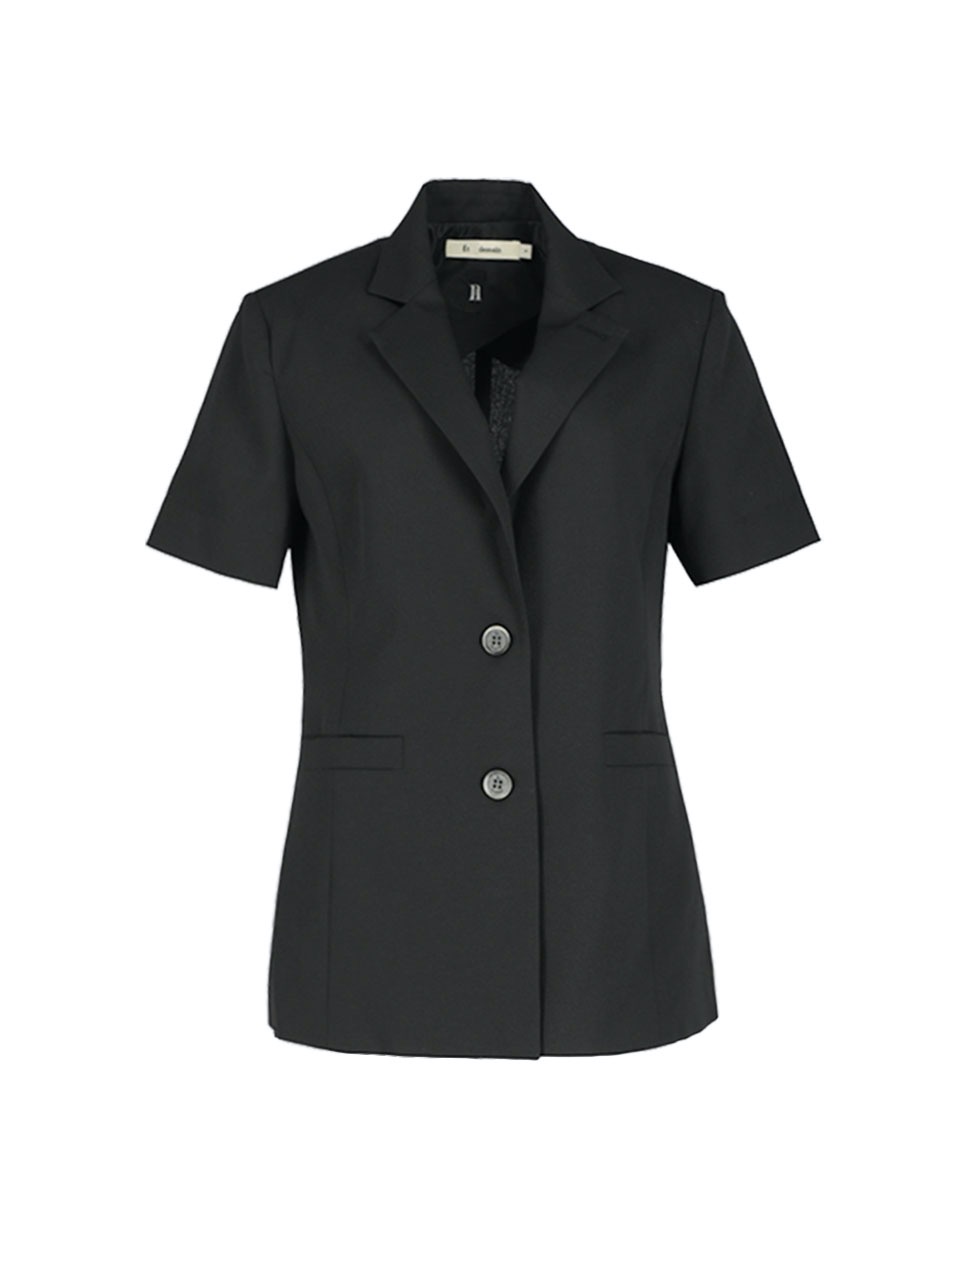 Summer Linen Two-button Jacket (Black)